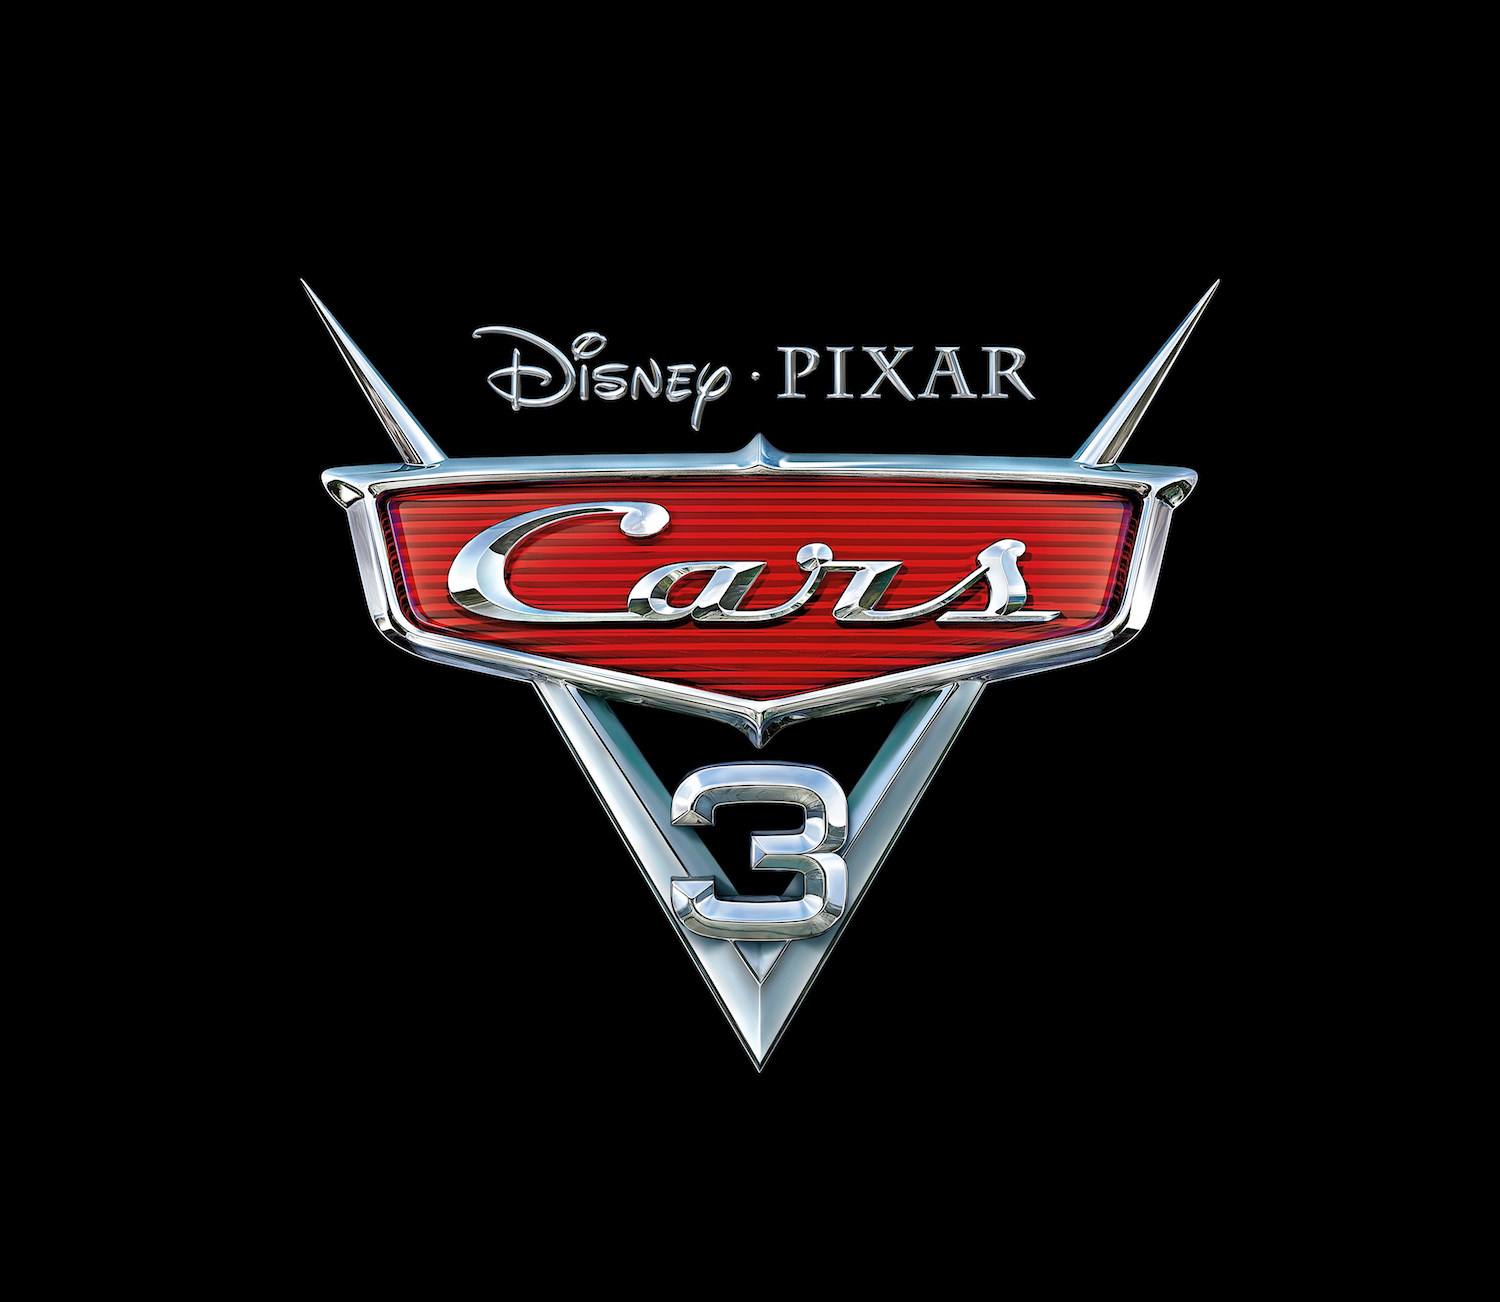 Disney-Pixar Cars 3